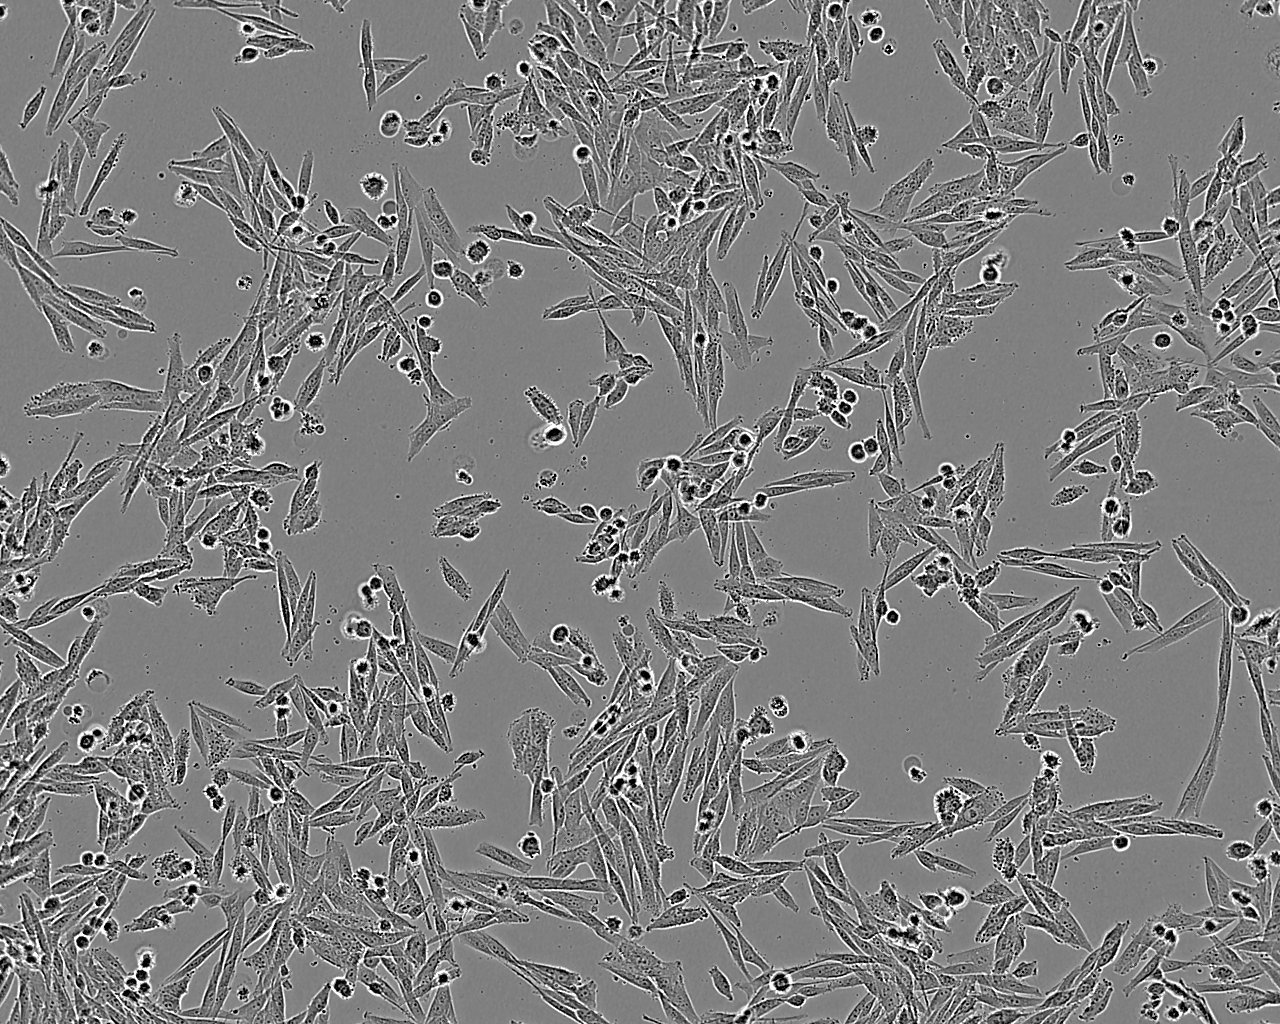 RWPE-1 epithelioid cells人正常前列腺上皮细胞系,RWPE-1 epithelioid cells